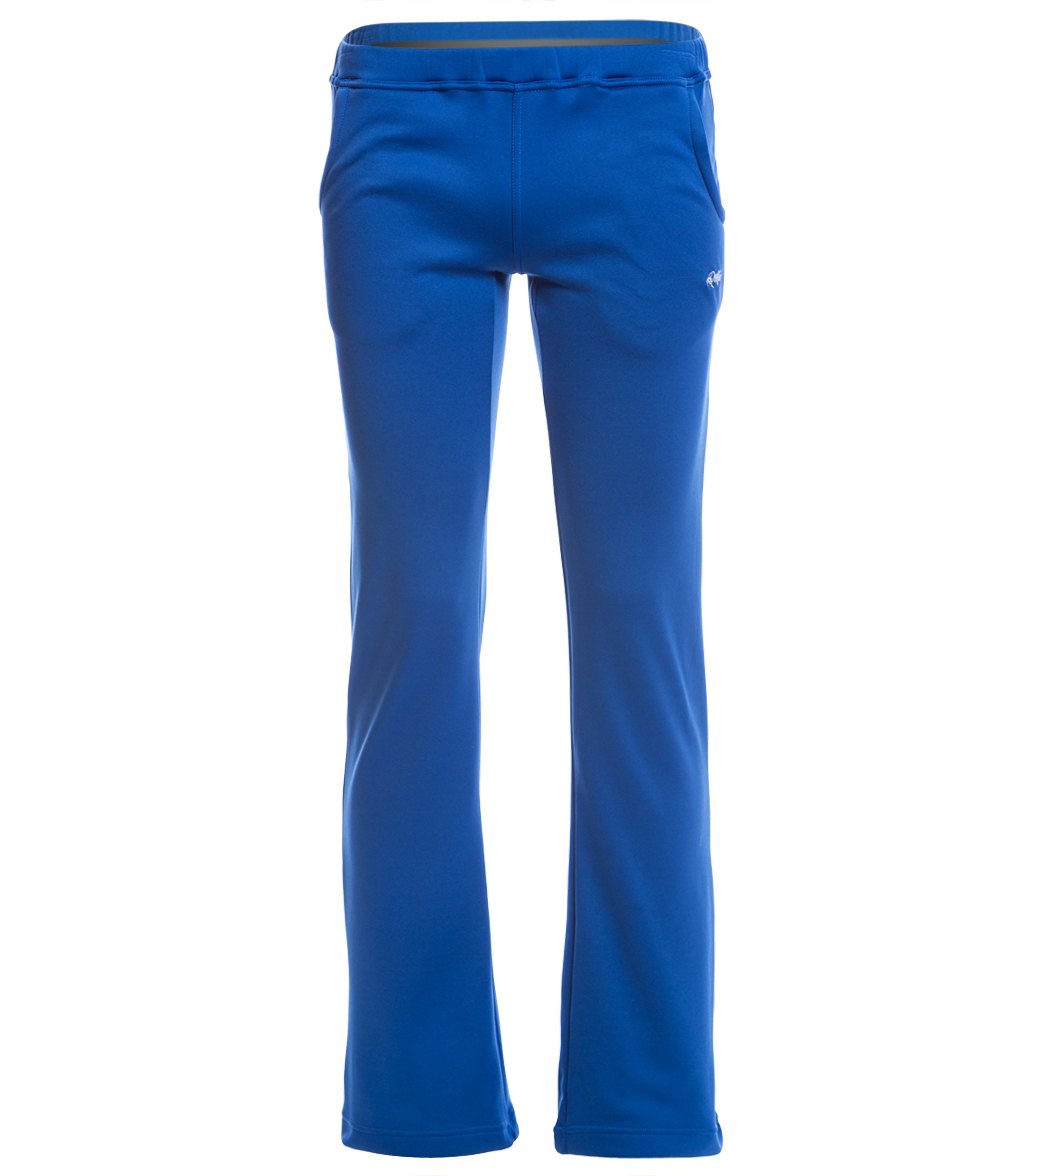 Dolfin Warm Up Pants - Royal Xxlarge Size Xxl - Swimoutlet.com